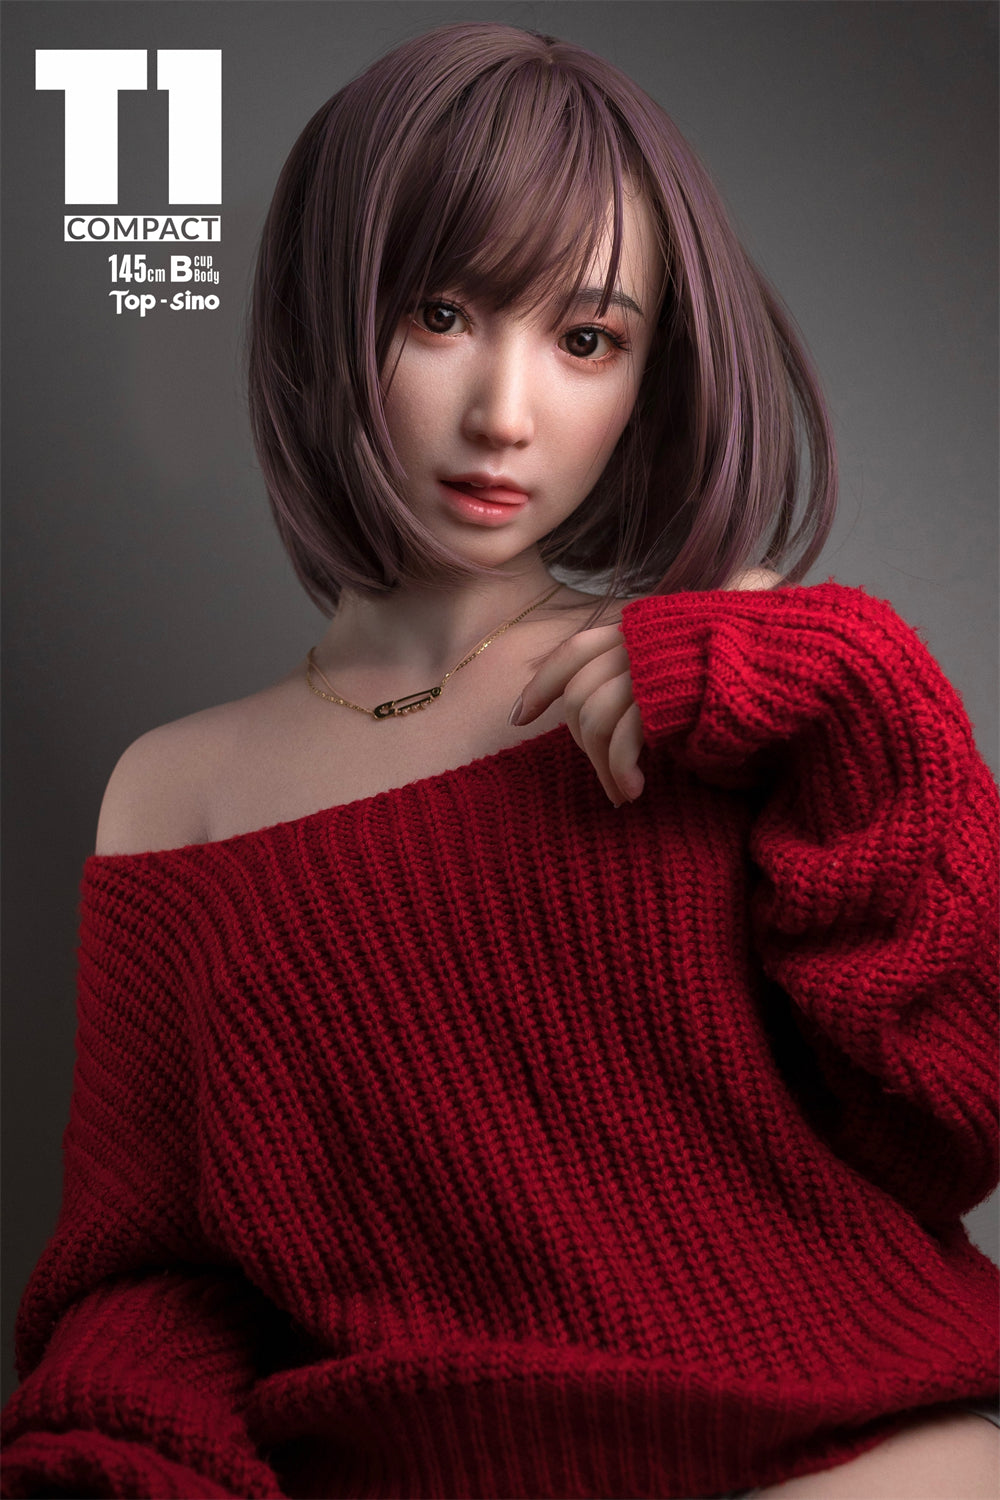 Top Sino 145 cm B Platinum Silicone - Mixiaoyou - V1 | Sex Dolls SG